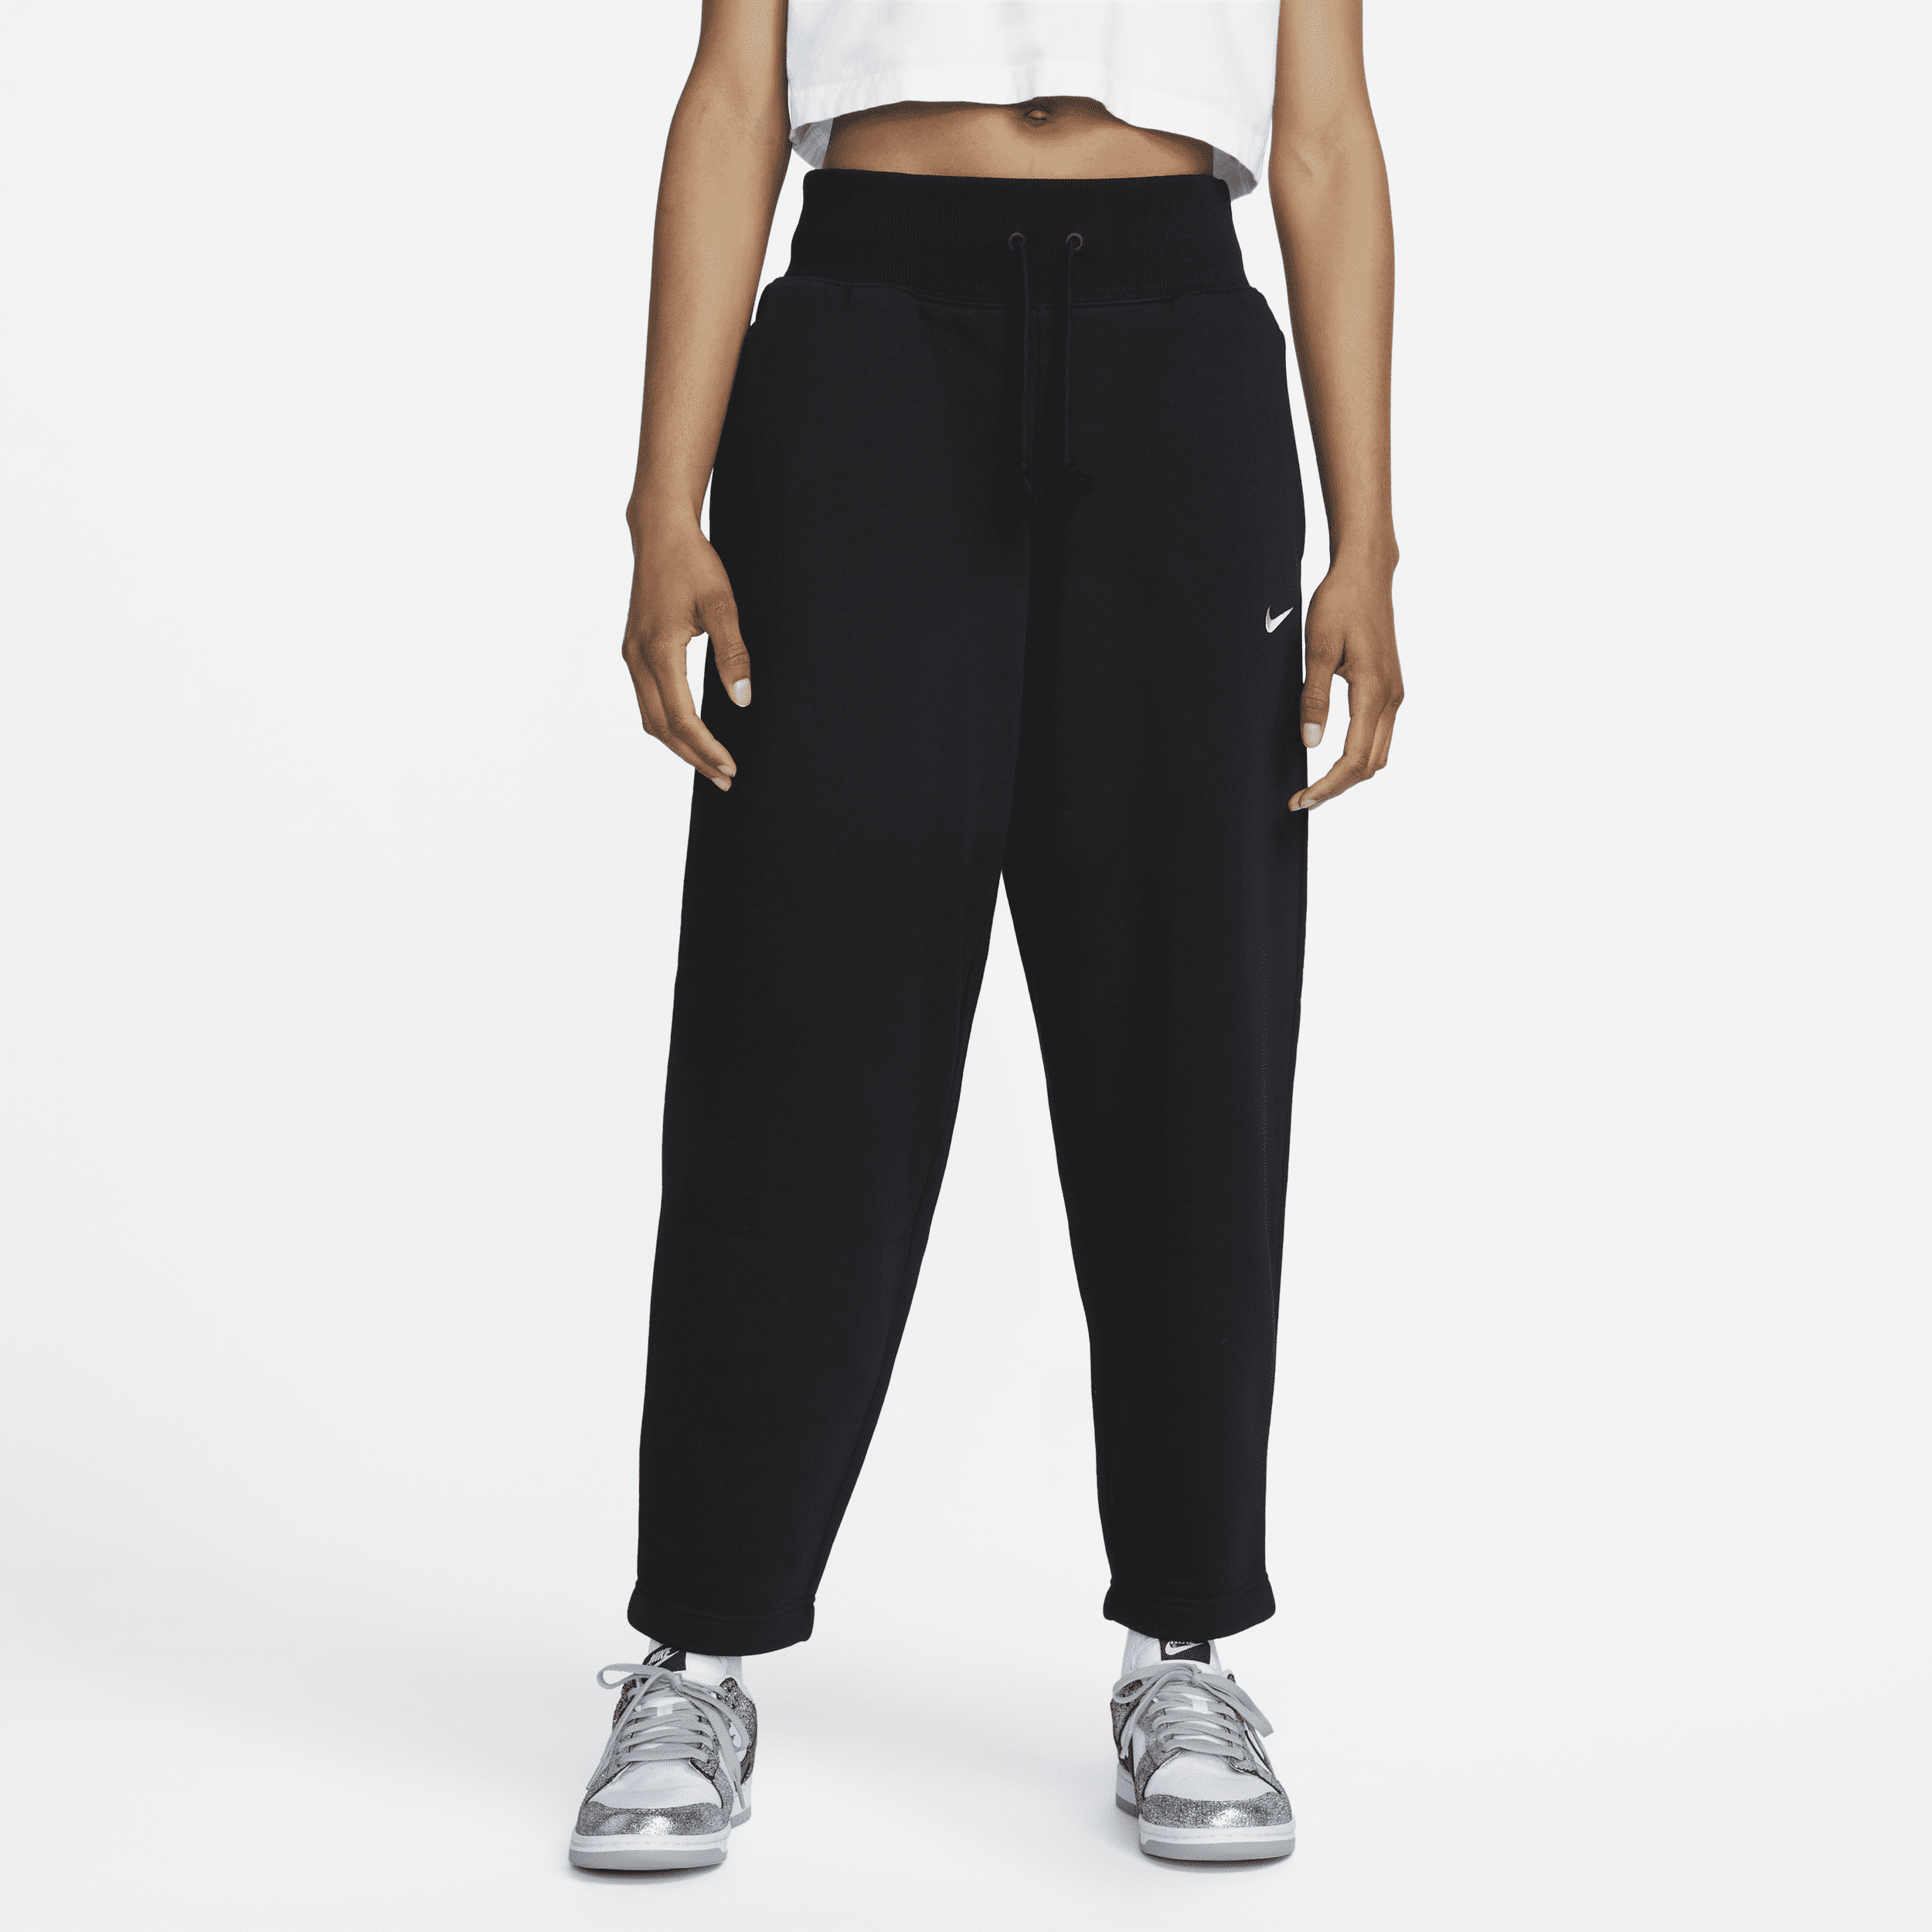 Pantaloni tuta Curve a 7/8 e vita alta Nike Sportswear Phoenix Fleece – Donna - Nero